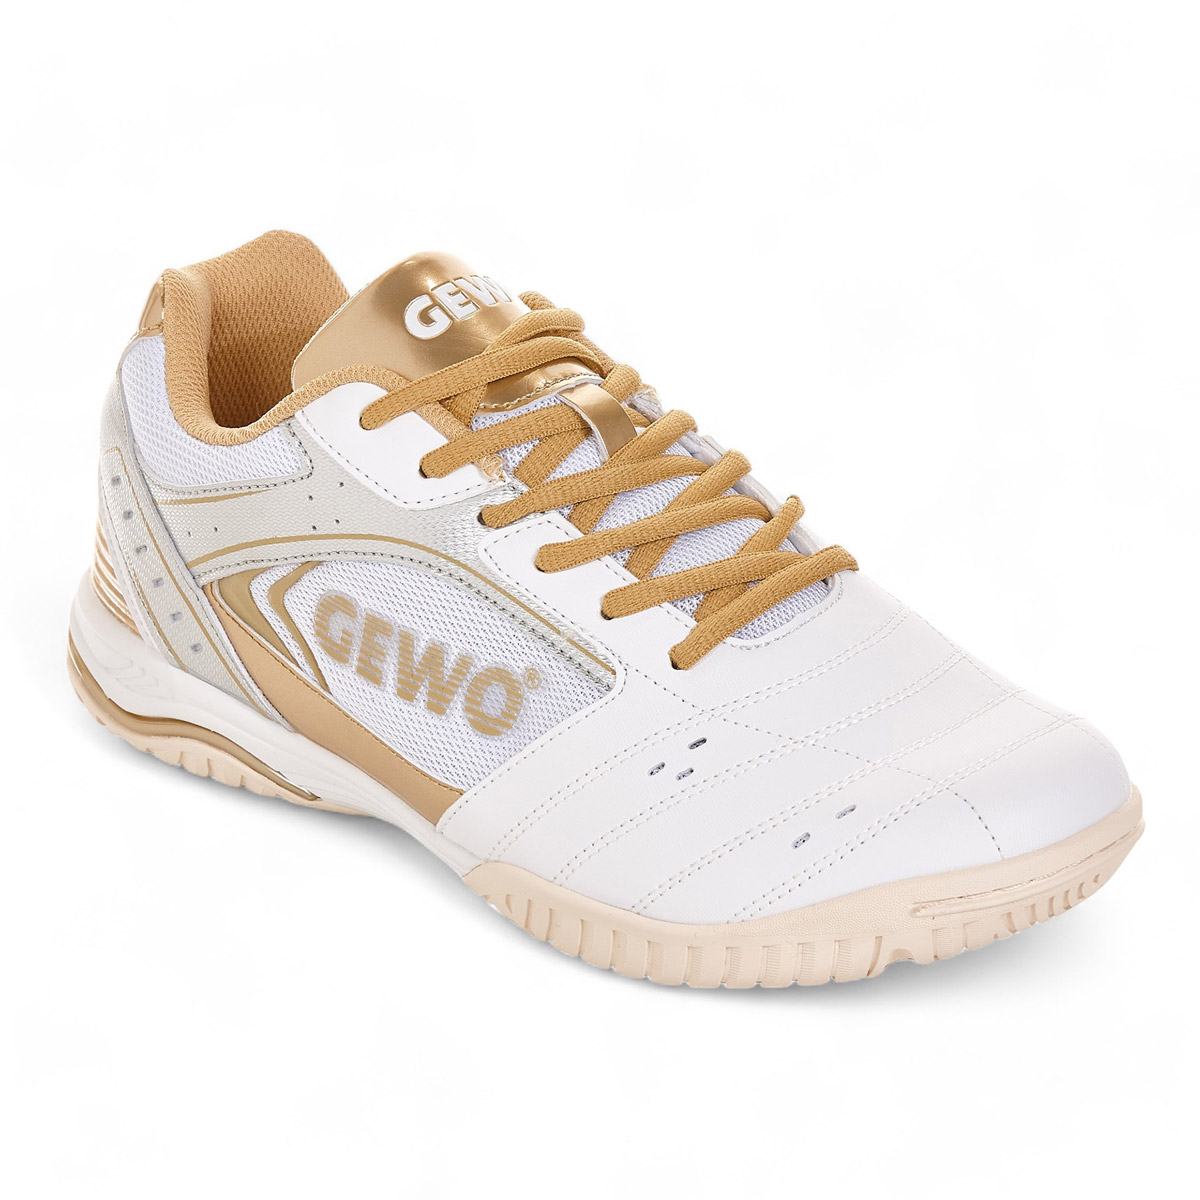 GEWO Shoe Gold Flex white/gold 39